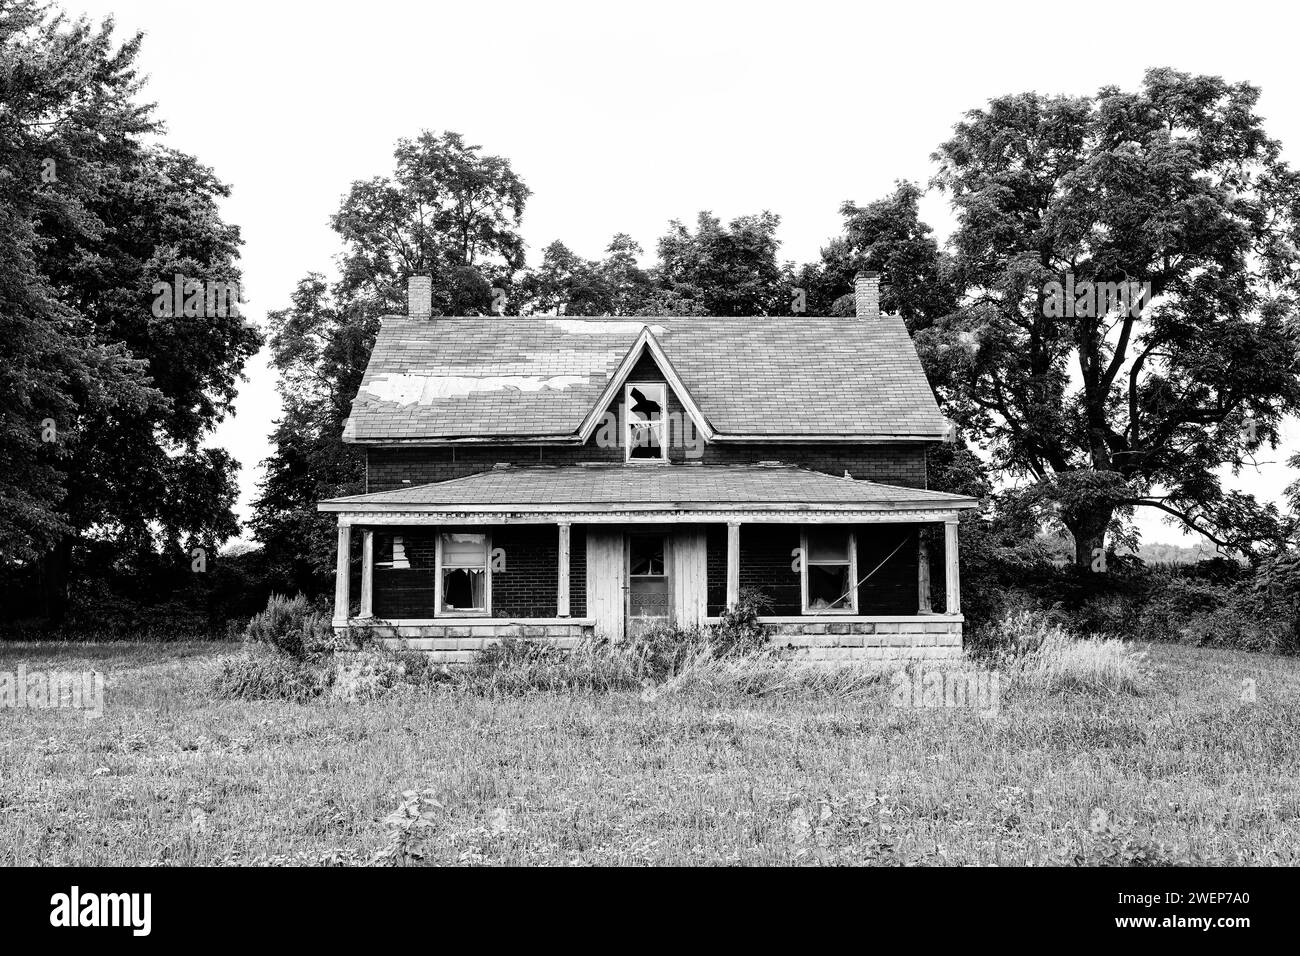 Abandoned house in monochrome landscape Stock Photo